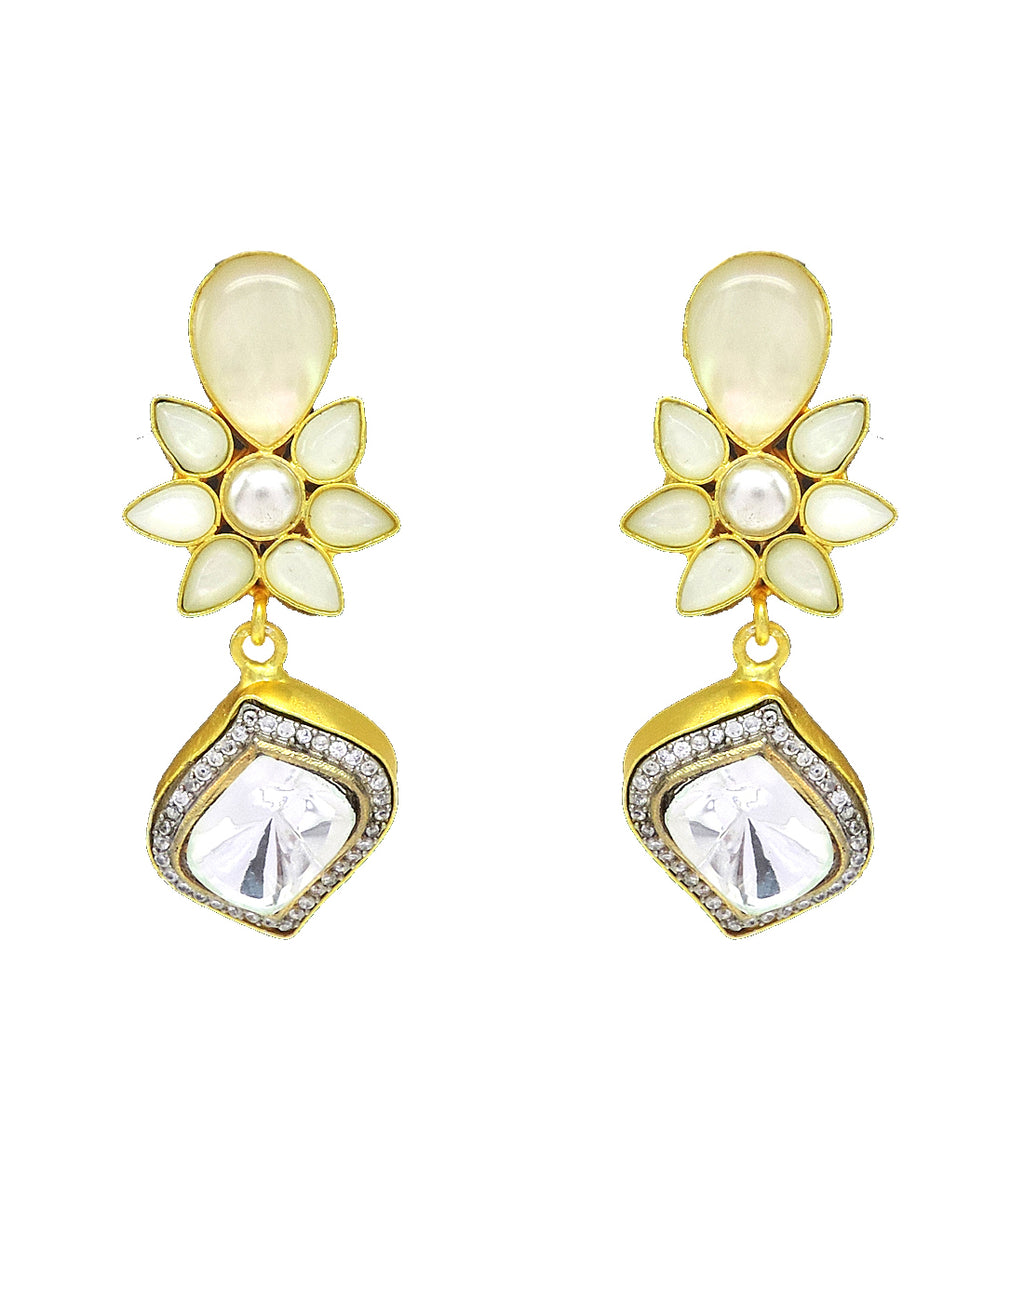 Flower Crystal Earrings - Statement Earrings - Gold-Plated & Hypoallergenic Jewellery - Made in India - Dubai Jewellery - Dori